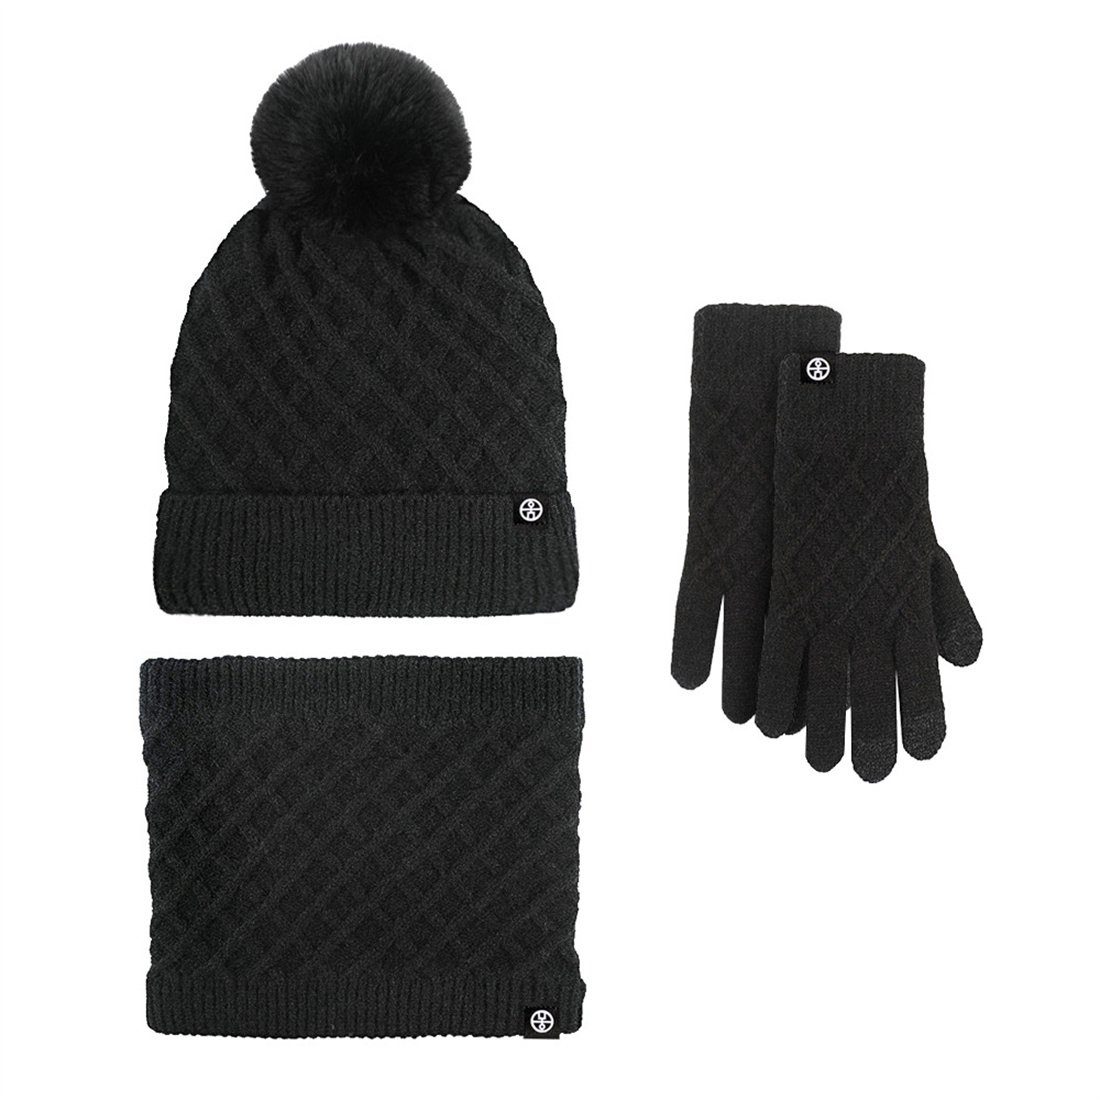 DÖRÖY Strickmütze Winter gepolstert Set Mütze Stück, Schal Schwarz Handschuhe Warm Warm 3